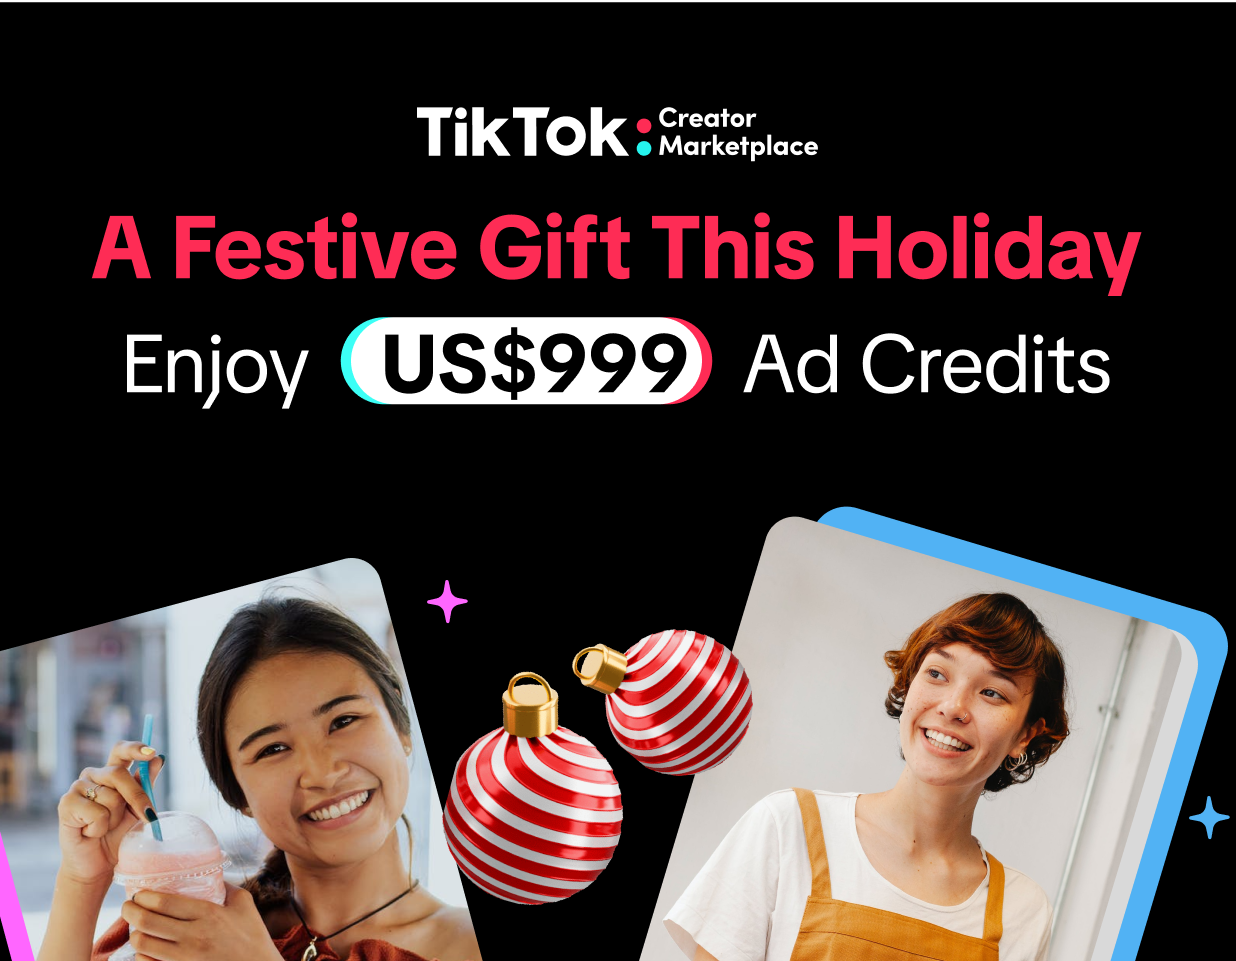 A Festive Gift: Enjoy US$999 Ad Credits this Holiday season